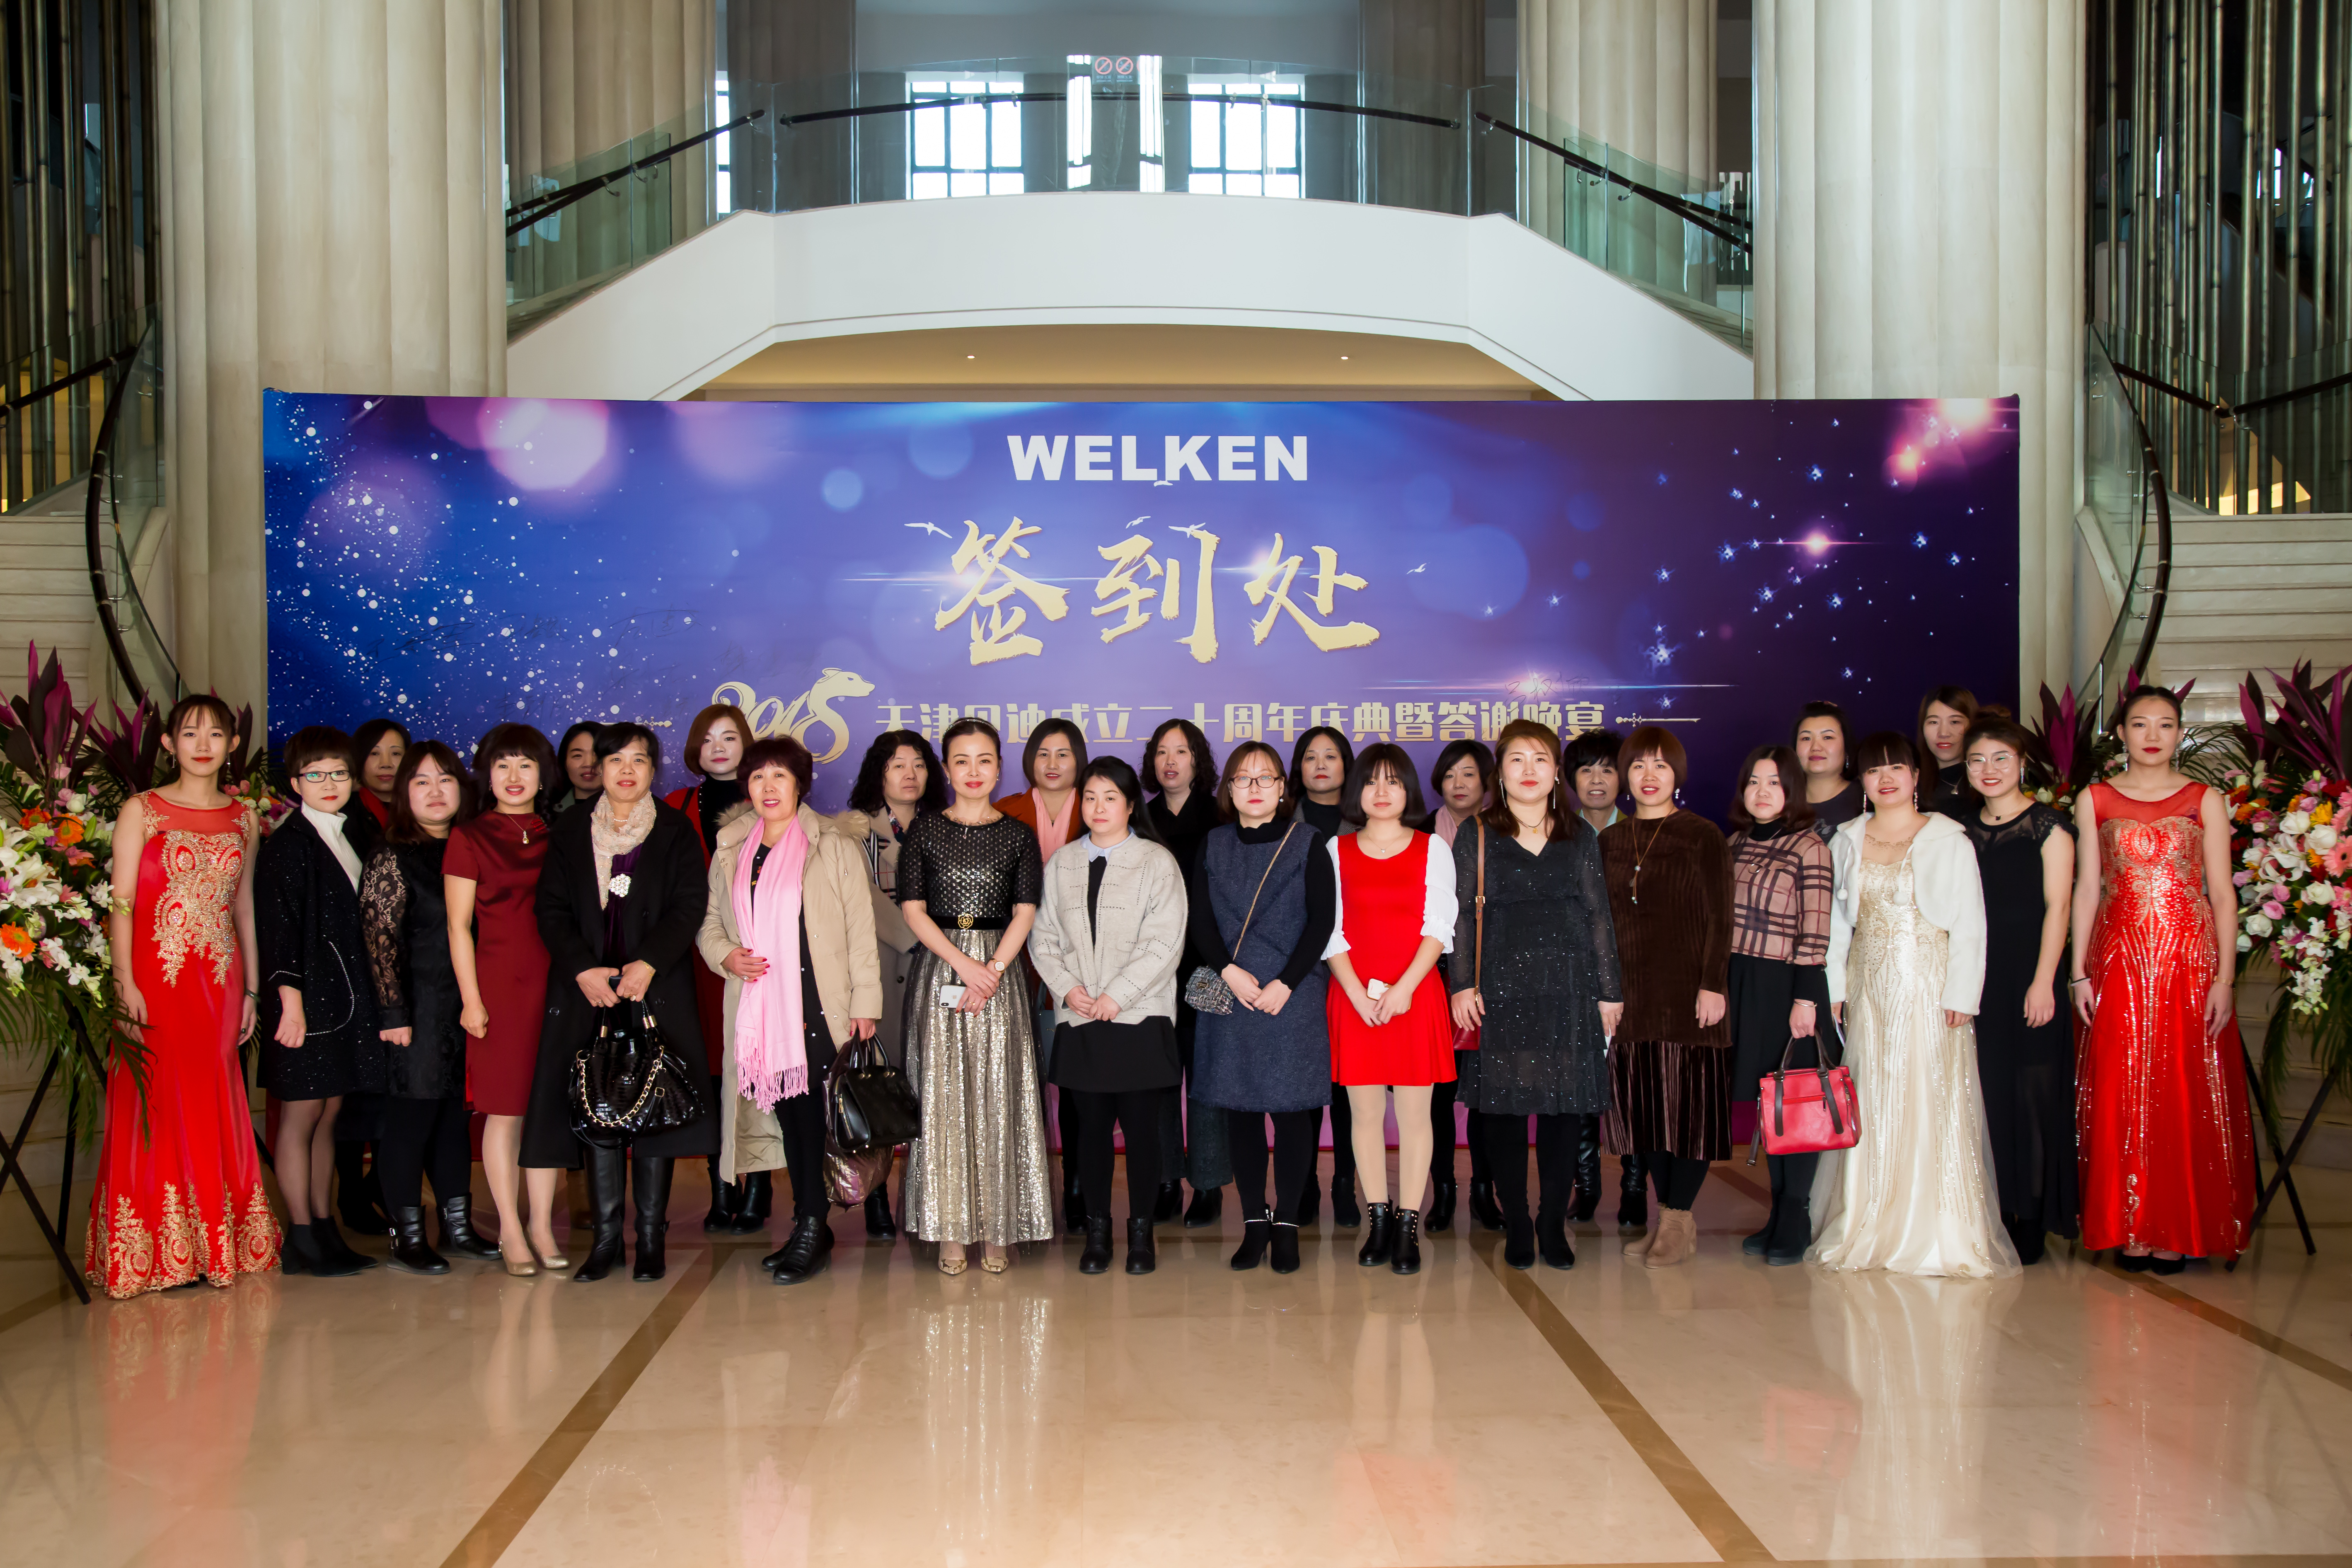 Tianjin Bradi holdt 20 års jubilæumsfejring